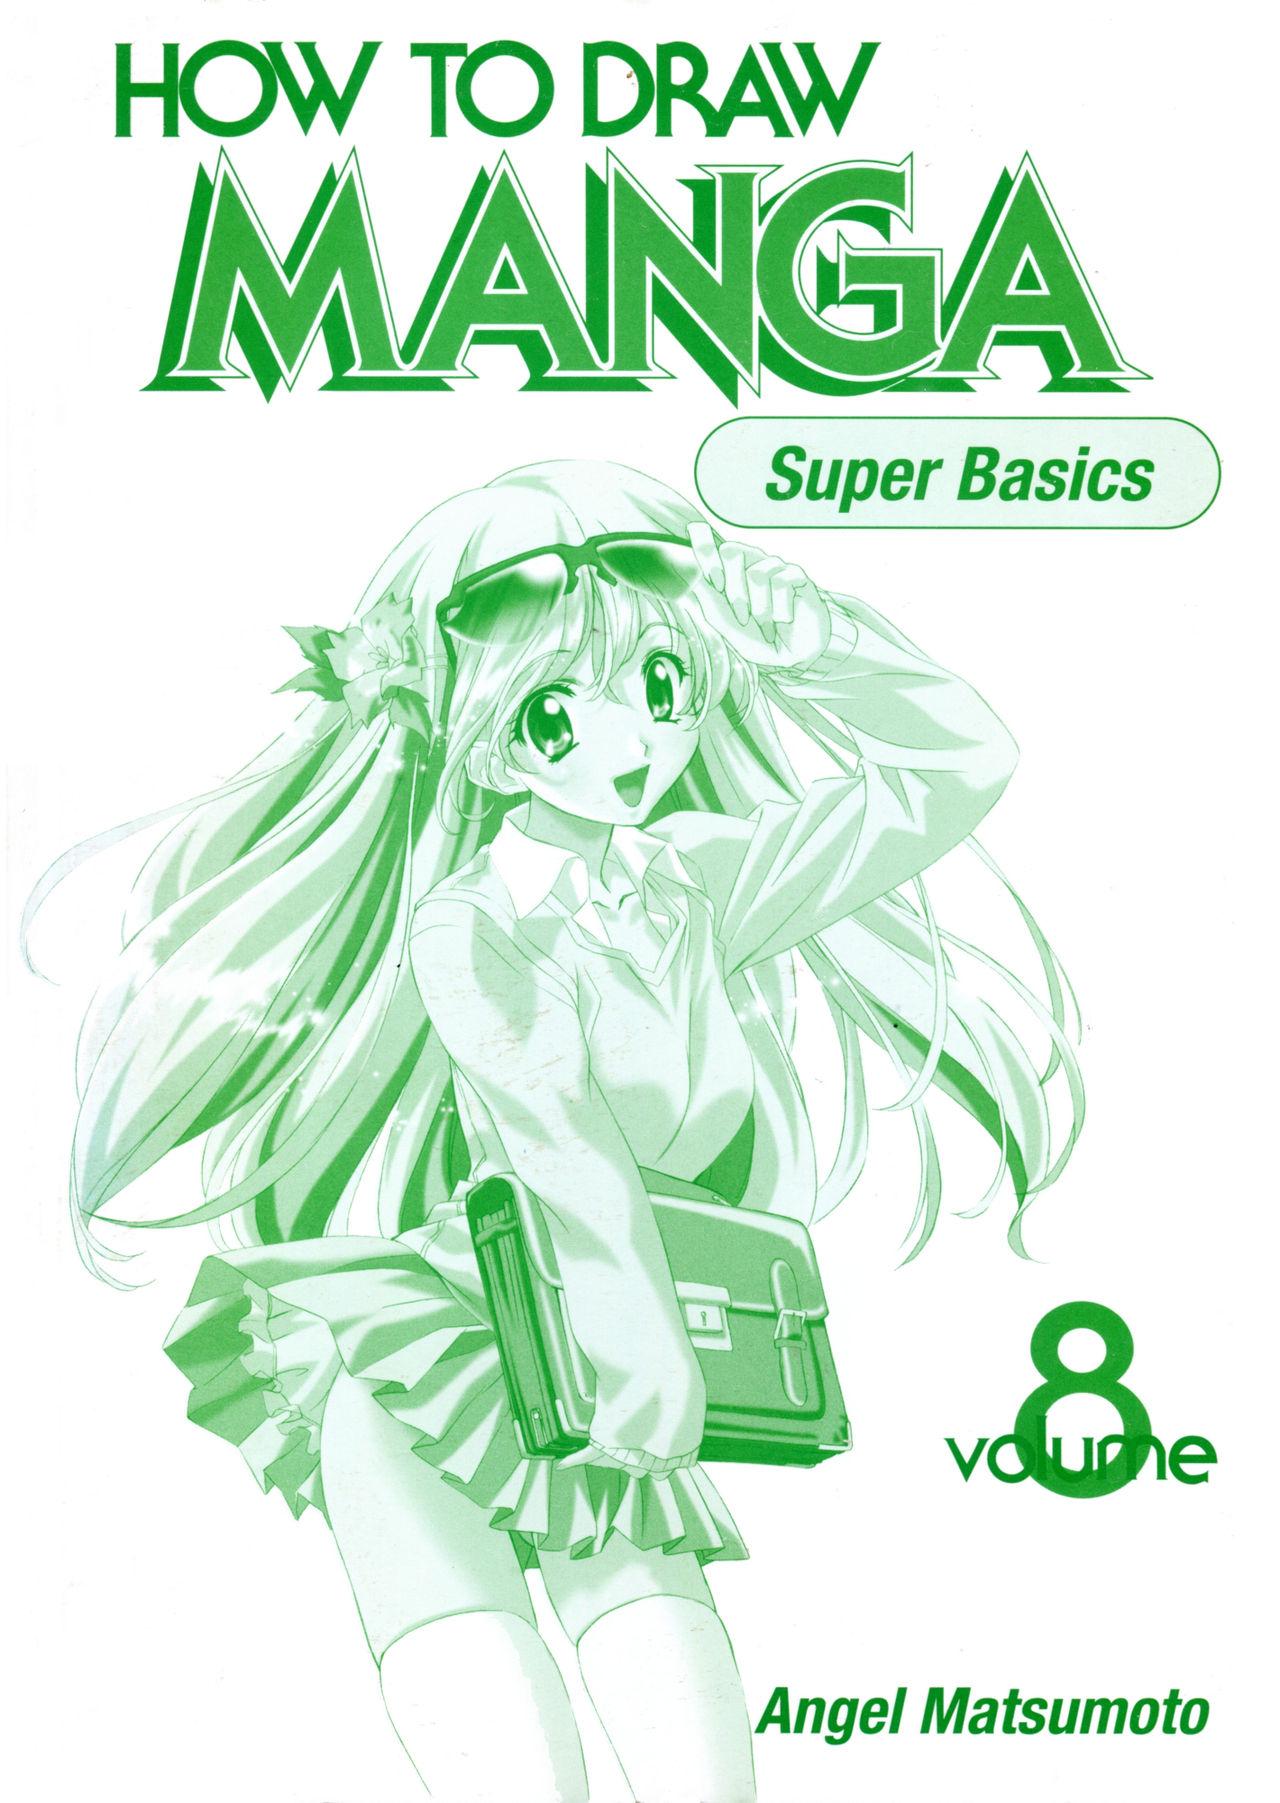 How to Draw Manga Vol. 8 - Super Basics by Angel Matsumoto 1